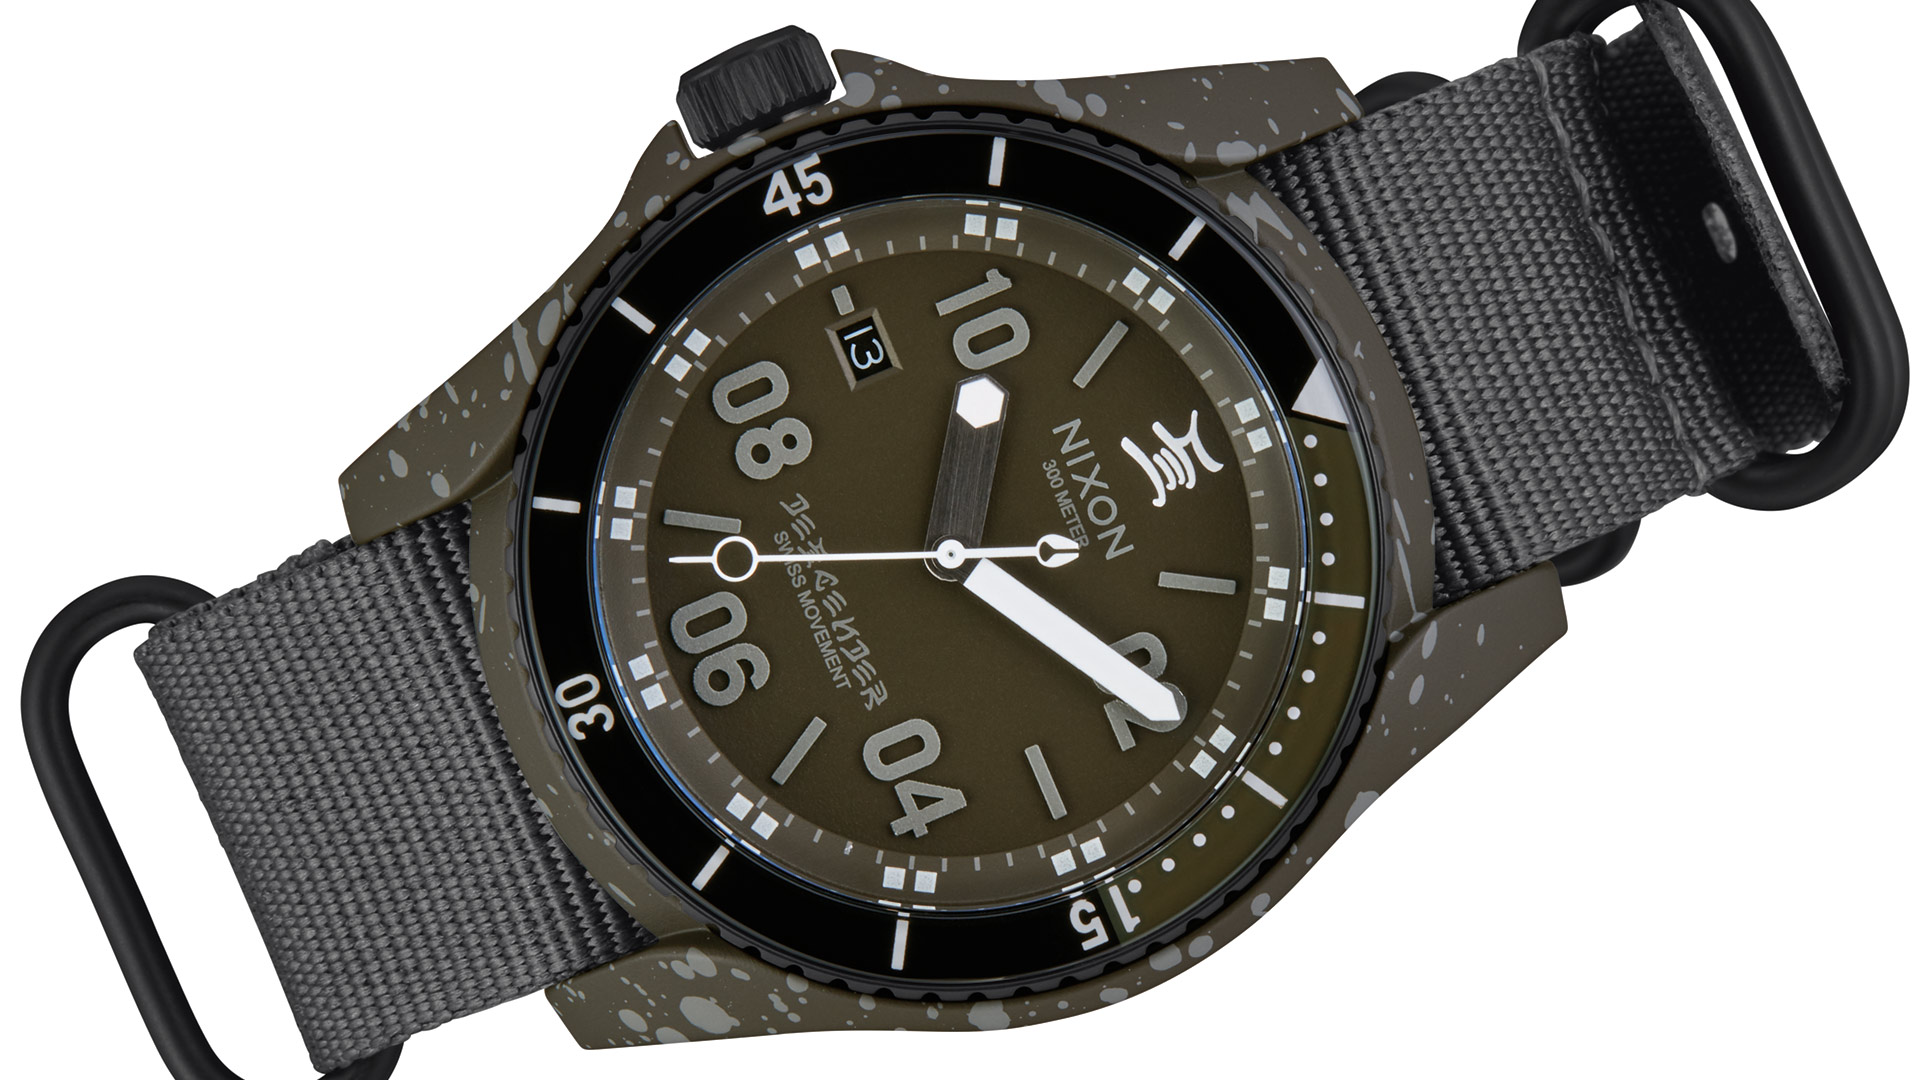 Nixon C.R. Stecyk III Descender Limited Edition Watch